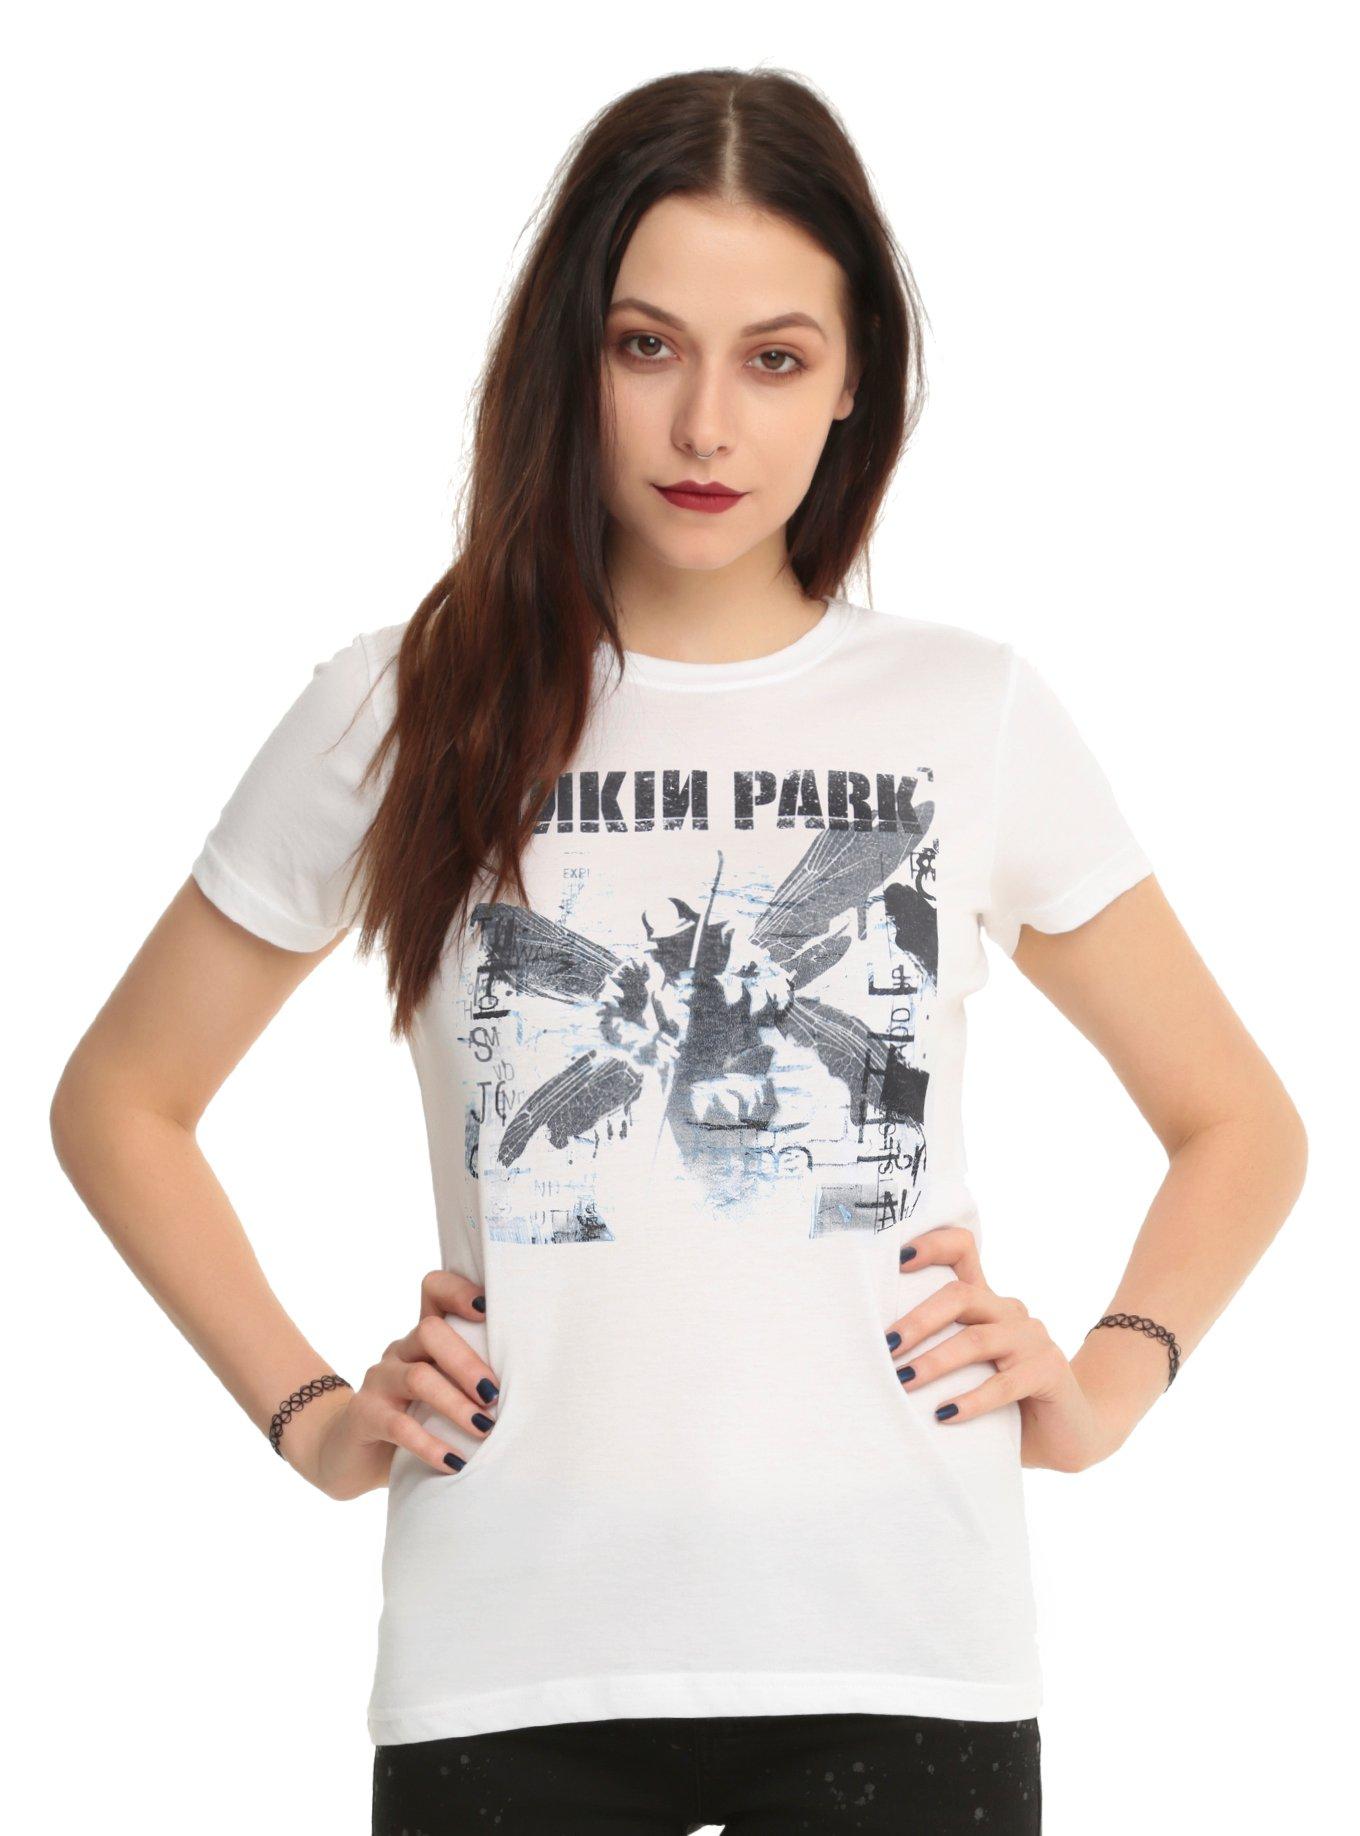 Linkin Park Hybrid Theory Girls T-Shirt, WHITE, hi-res